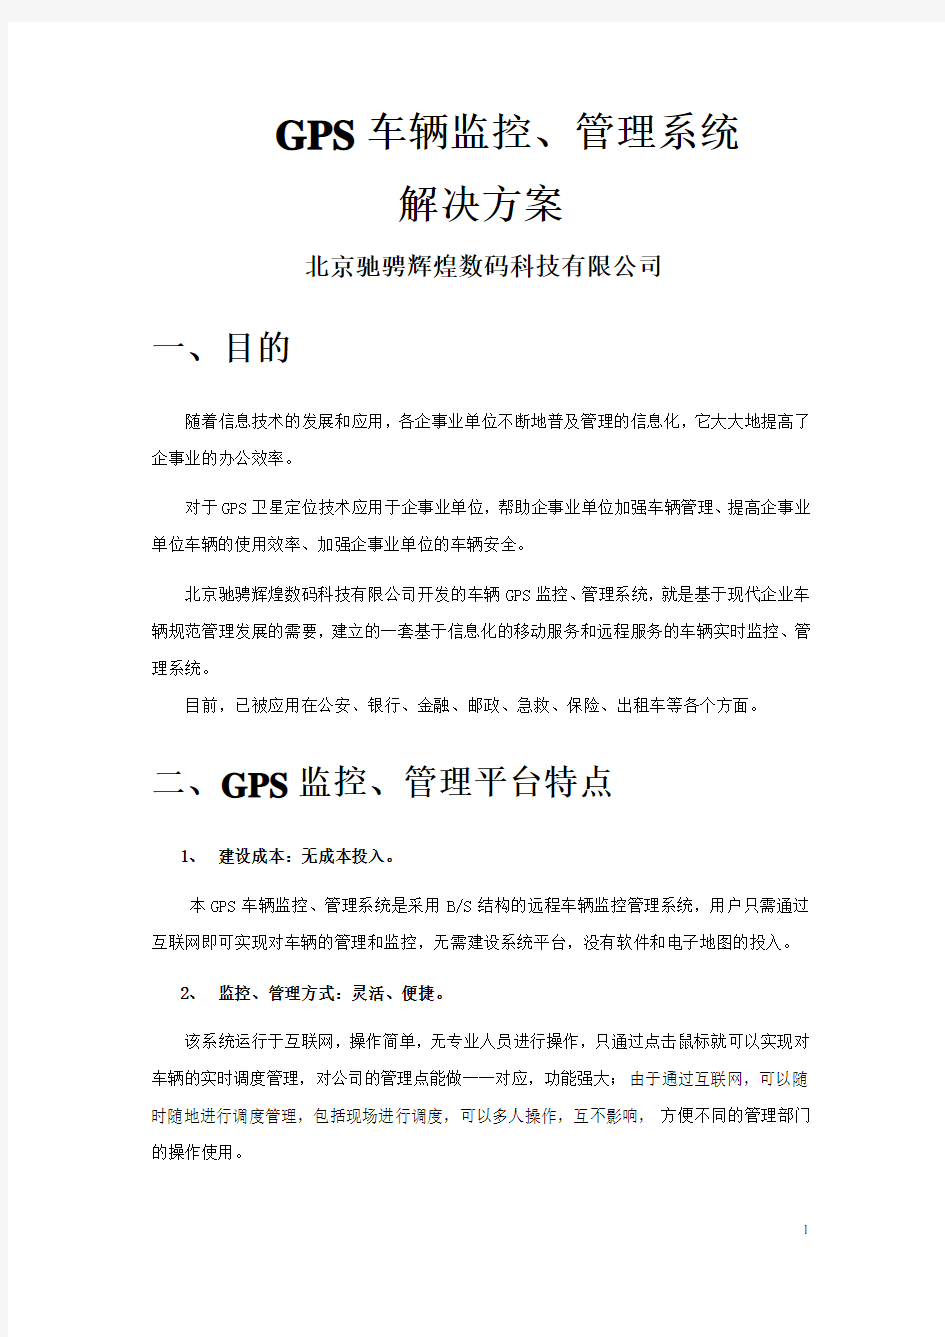 GPS车辆监控、管理系统解决方案北京驰骋辉煌数码科技有限公司